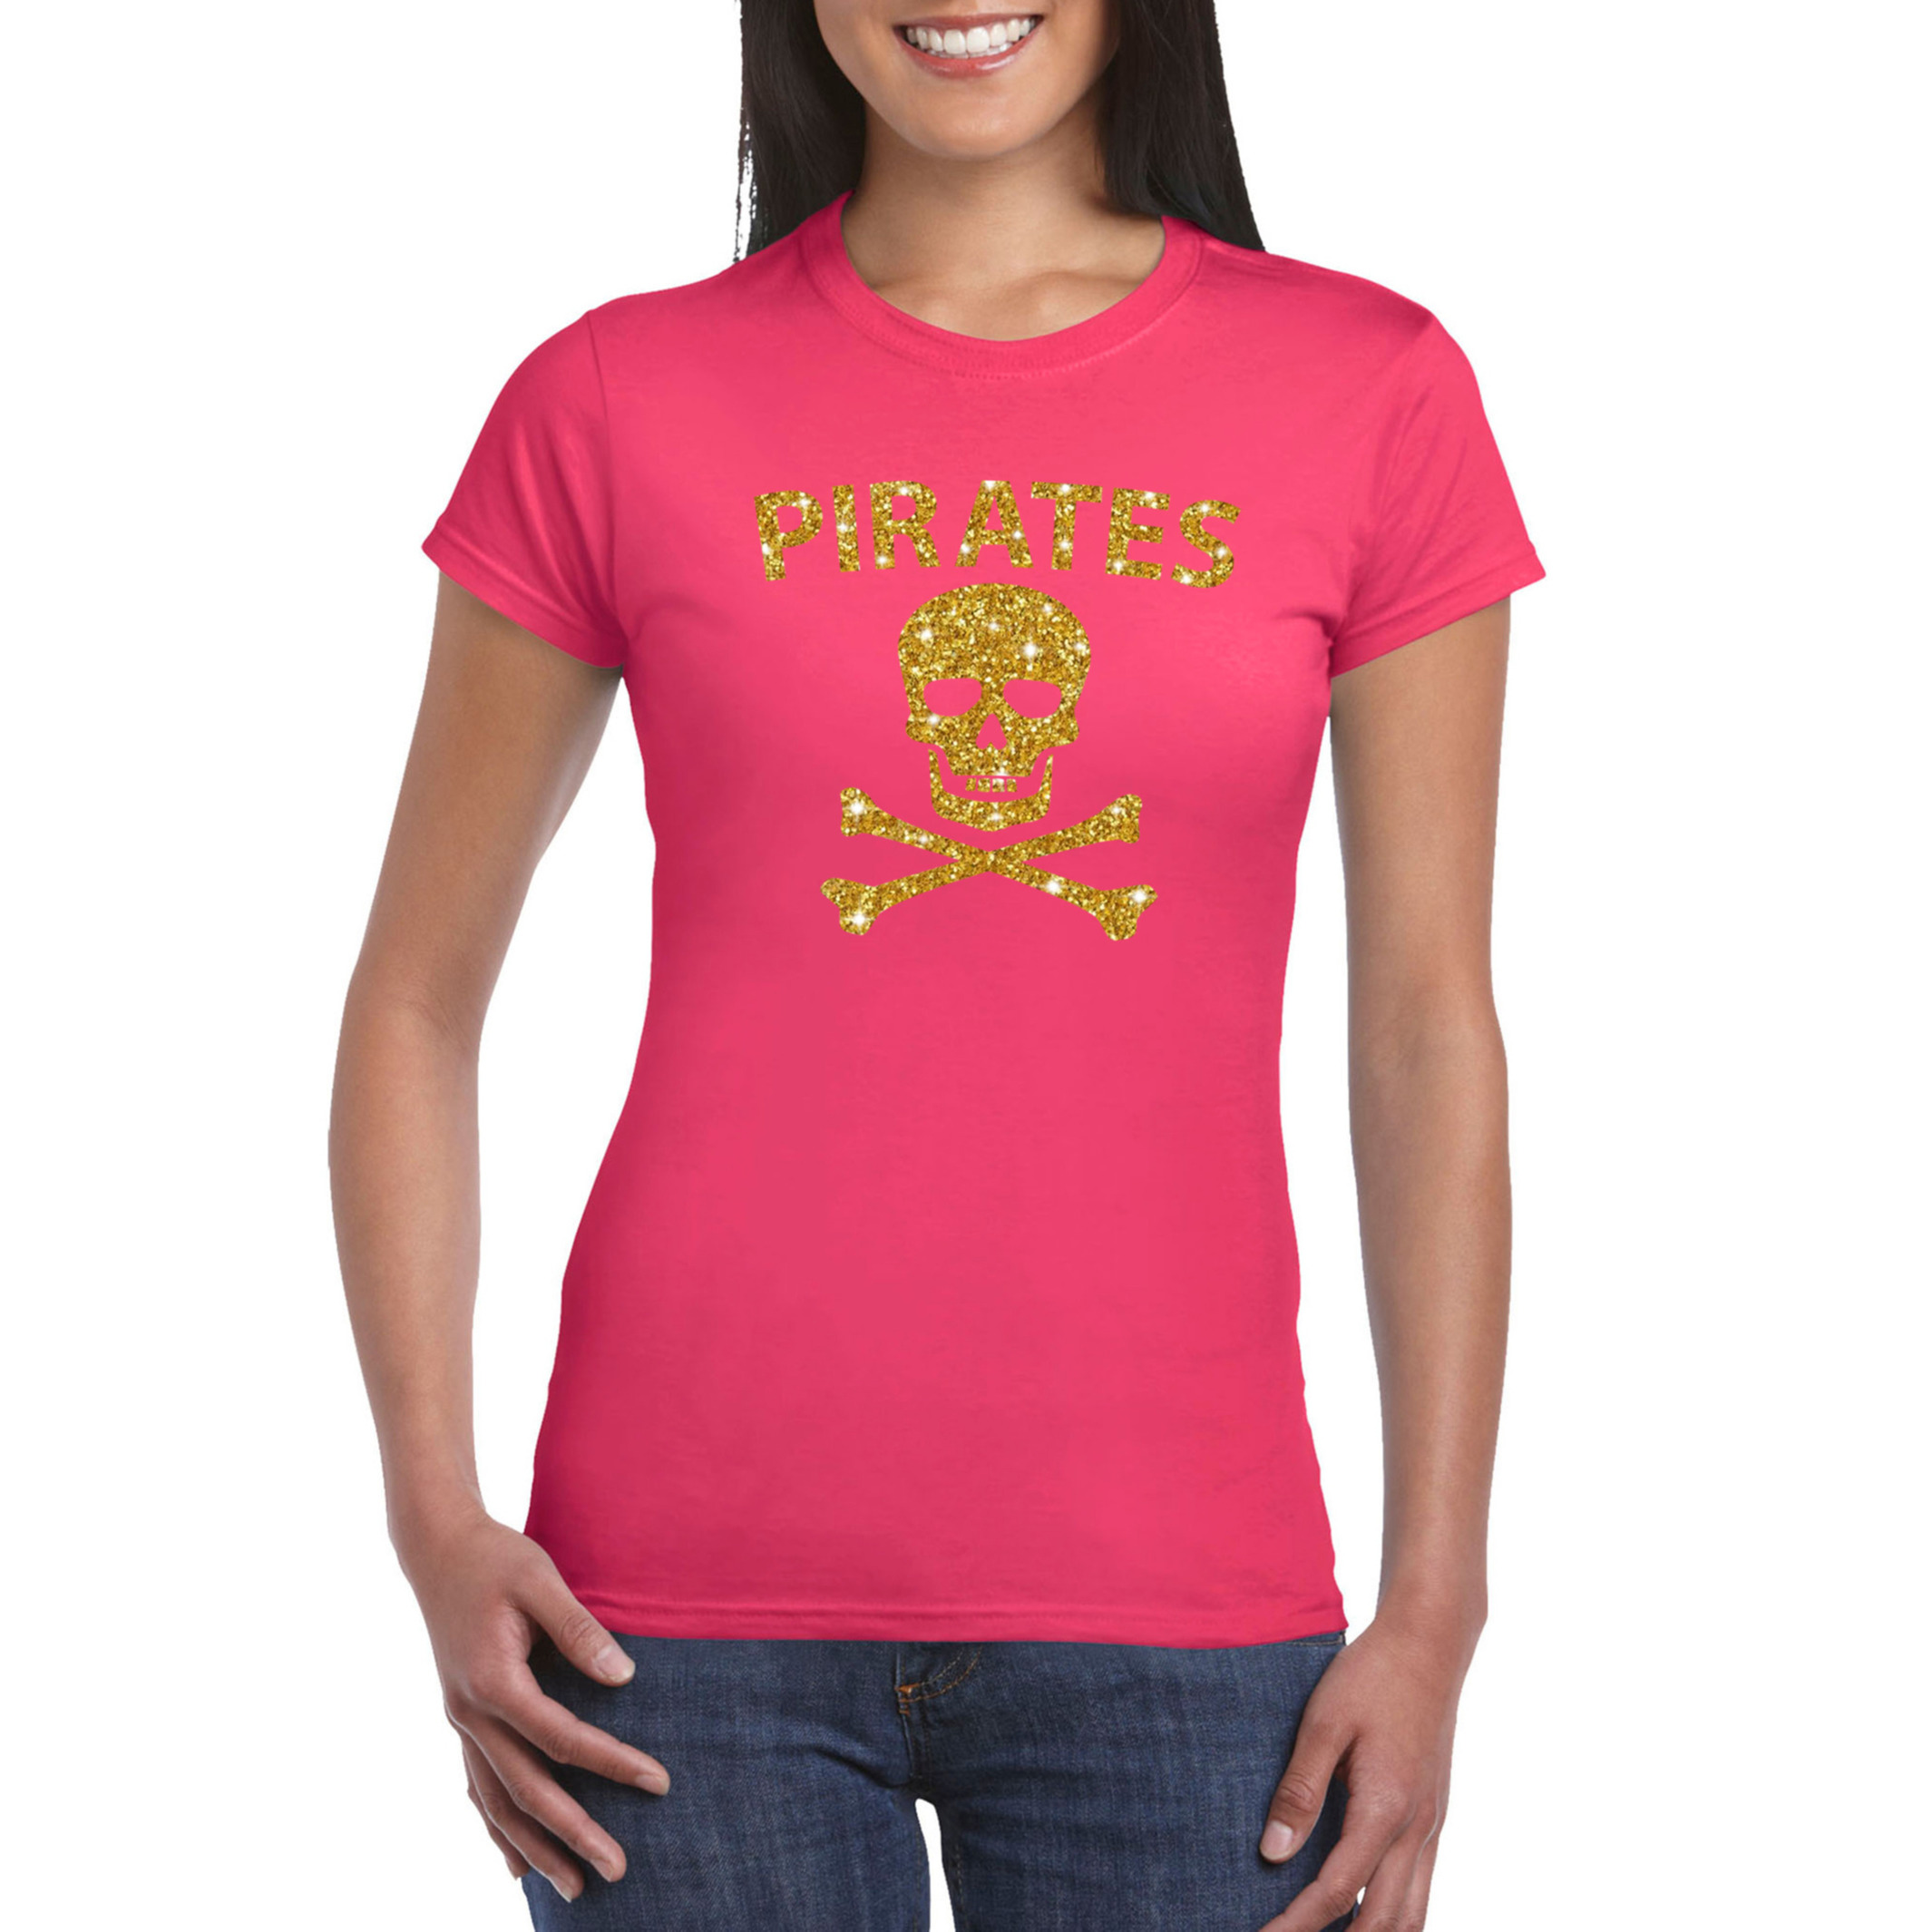 Carnaval foute party piraten t-shirt-kostuum roze dames met gouden glitter bedrukking